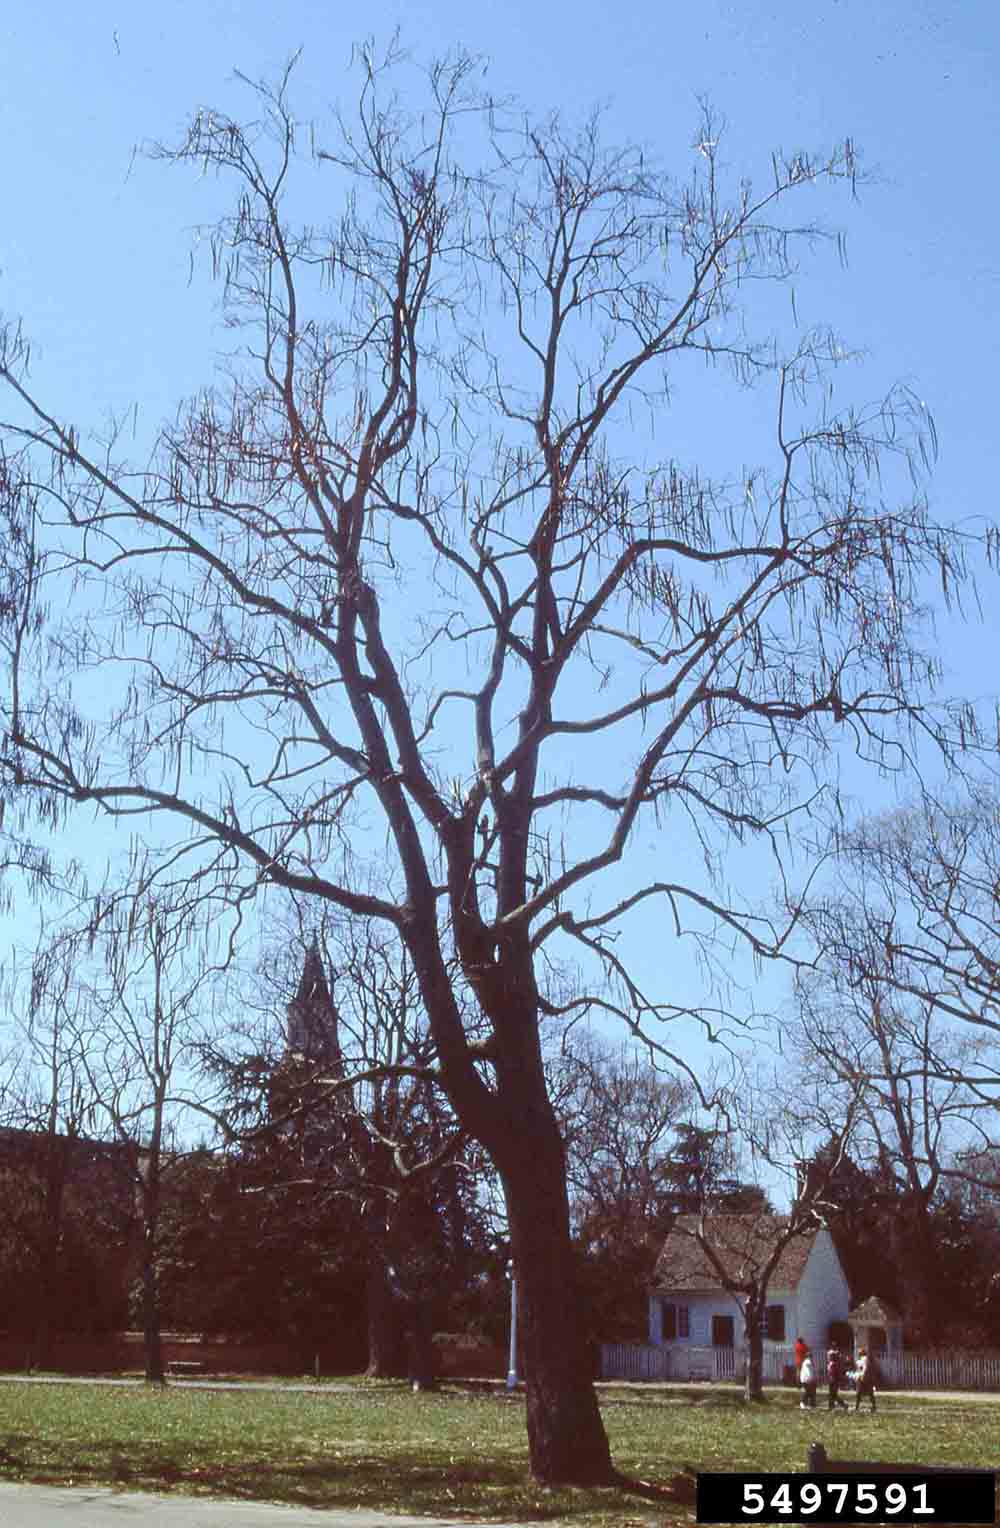 Southern catalpa tree habit, winter